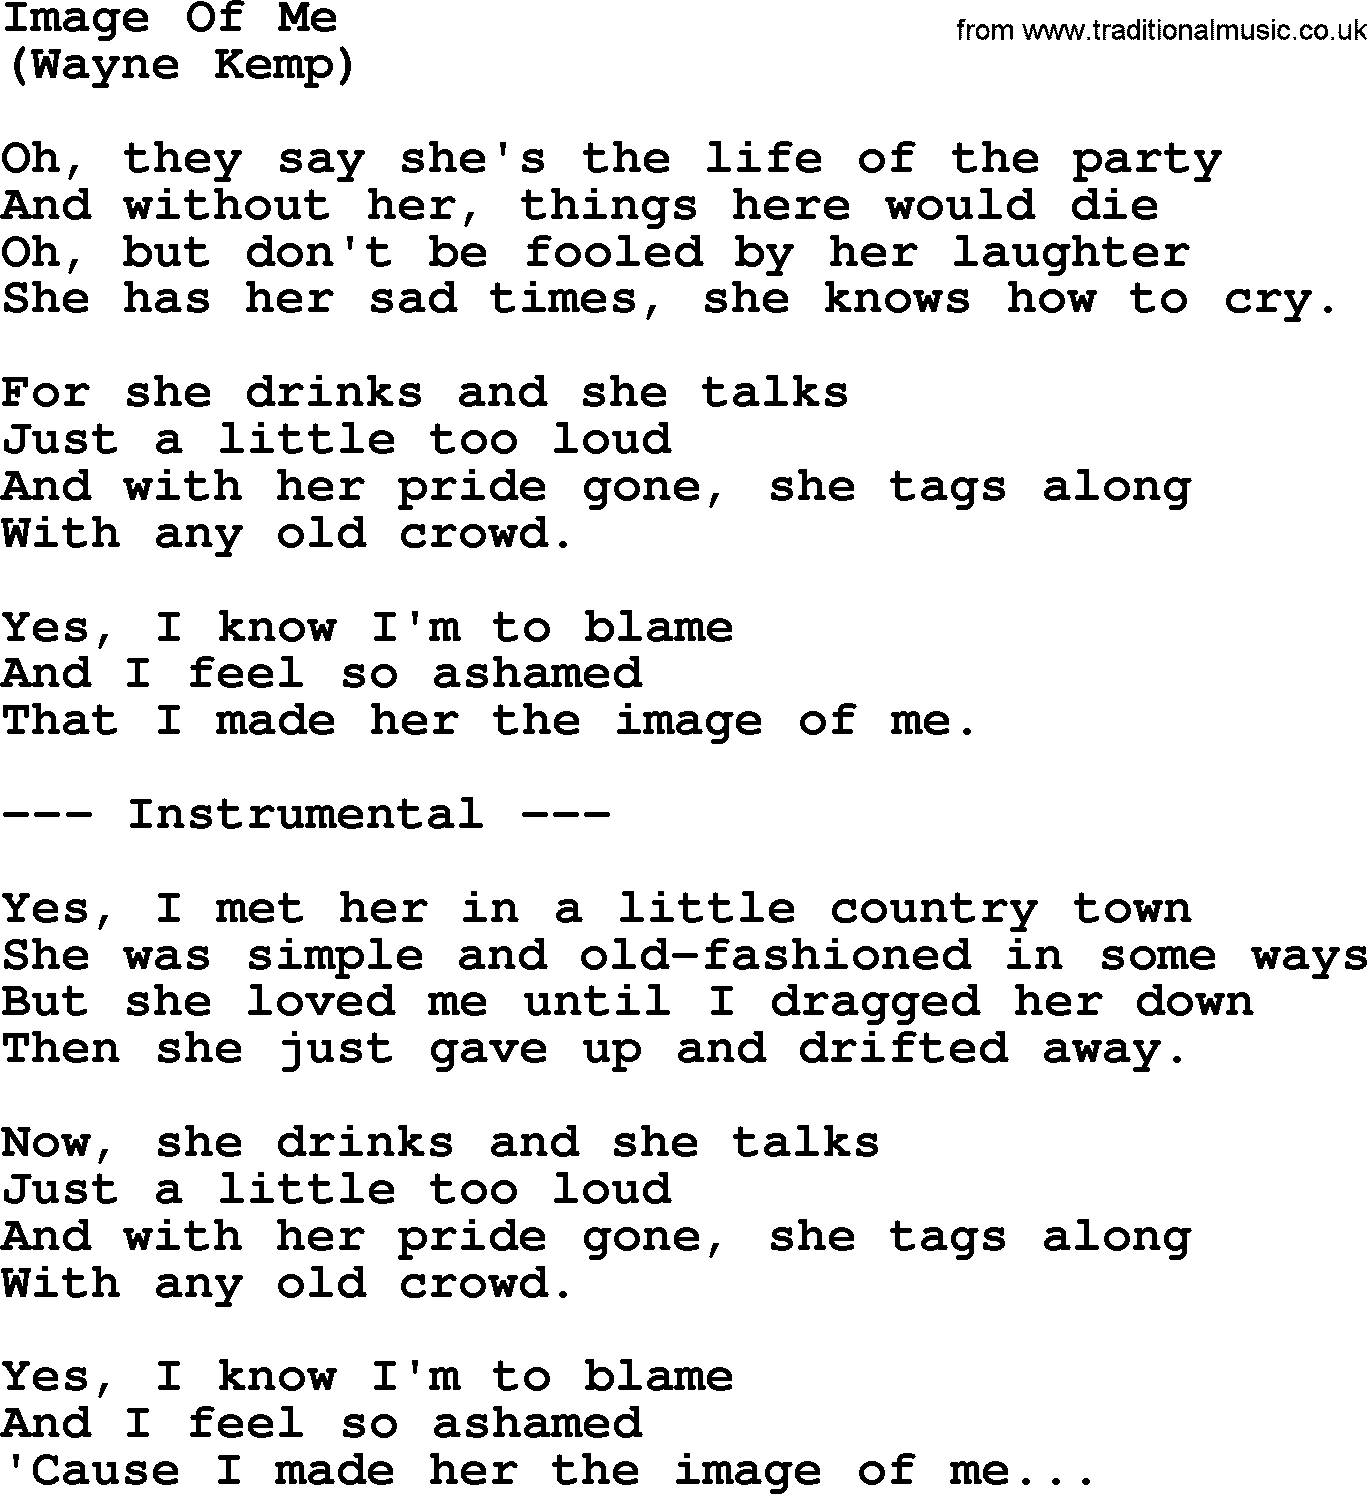 George Jones song: Image Of Me, lyrics